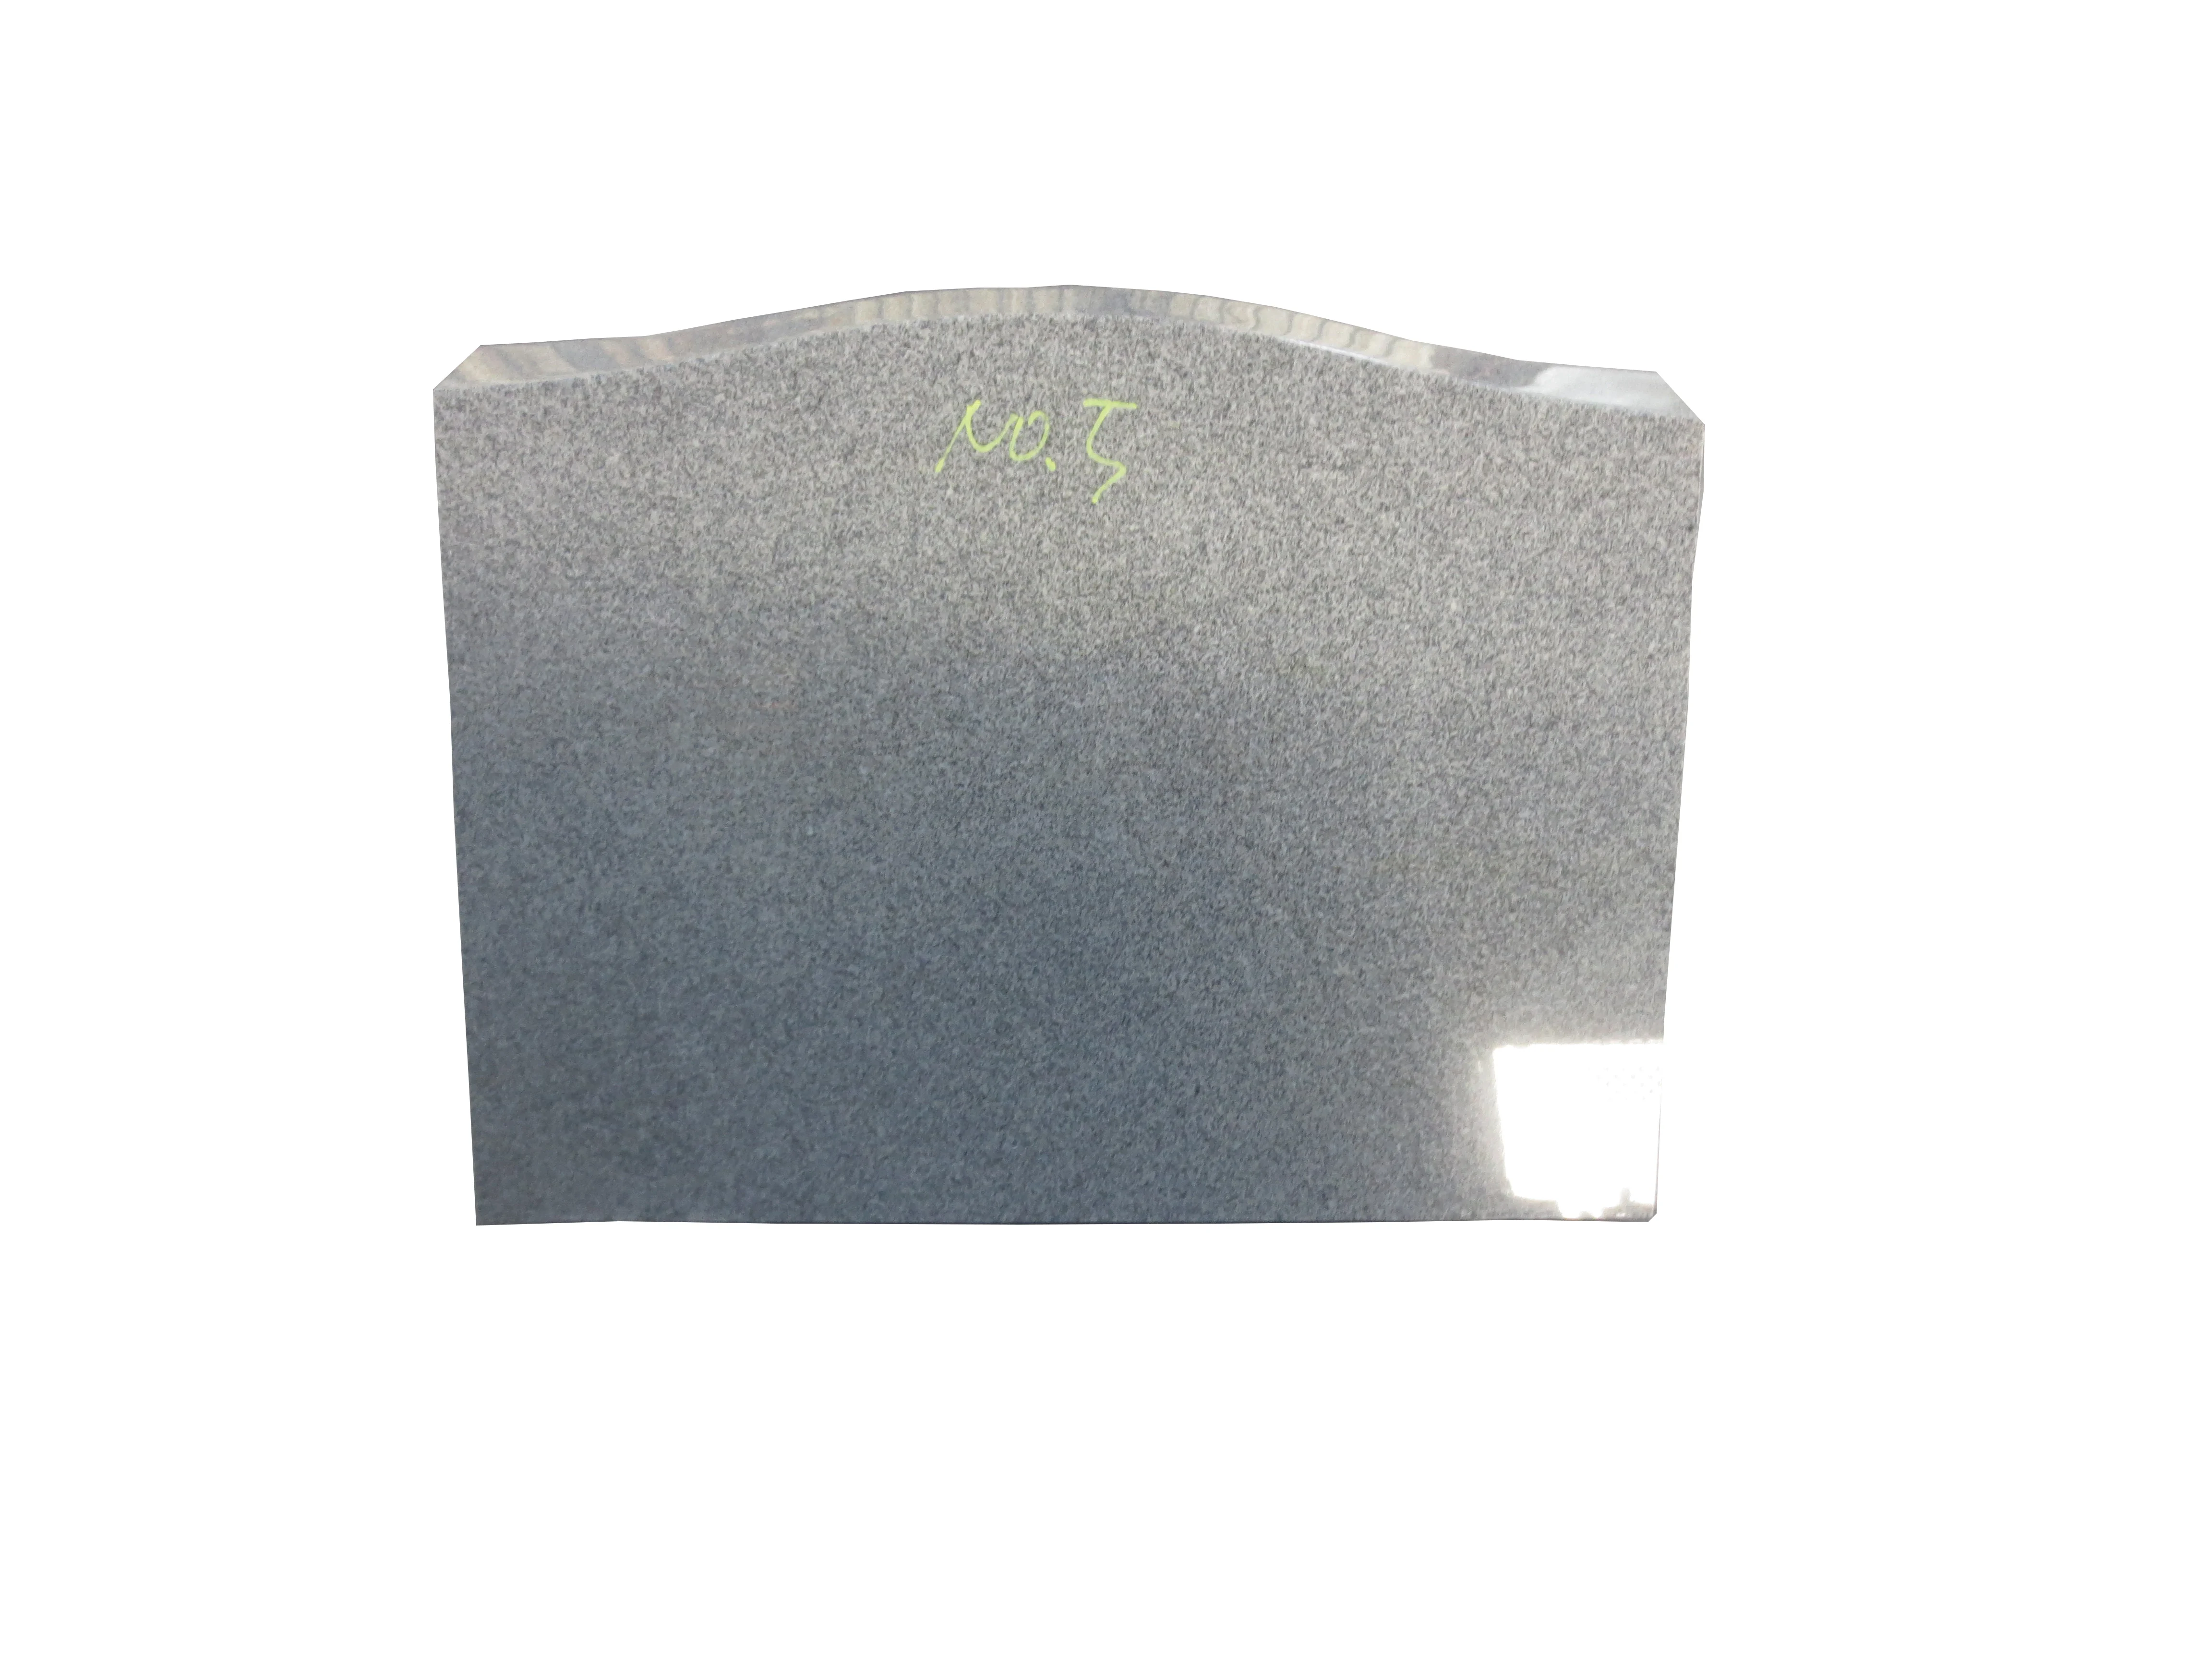 low price g633 light gray granite slants design cemetery